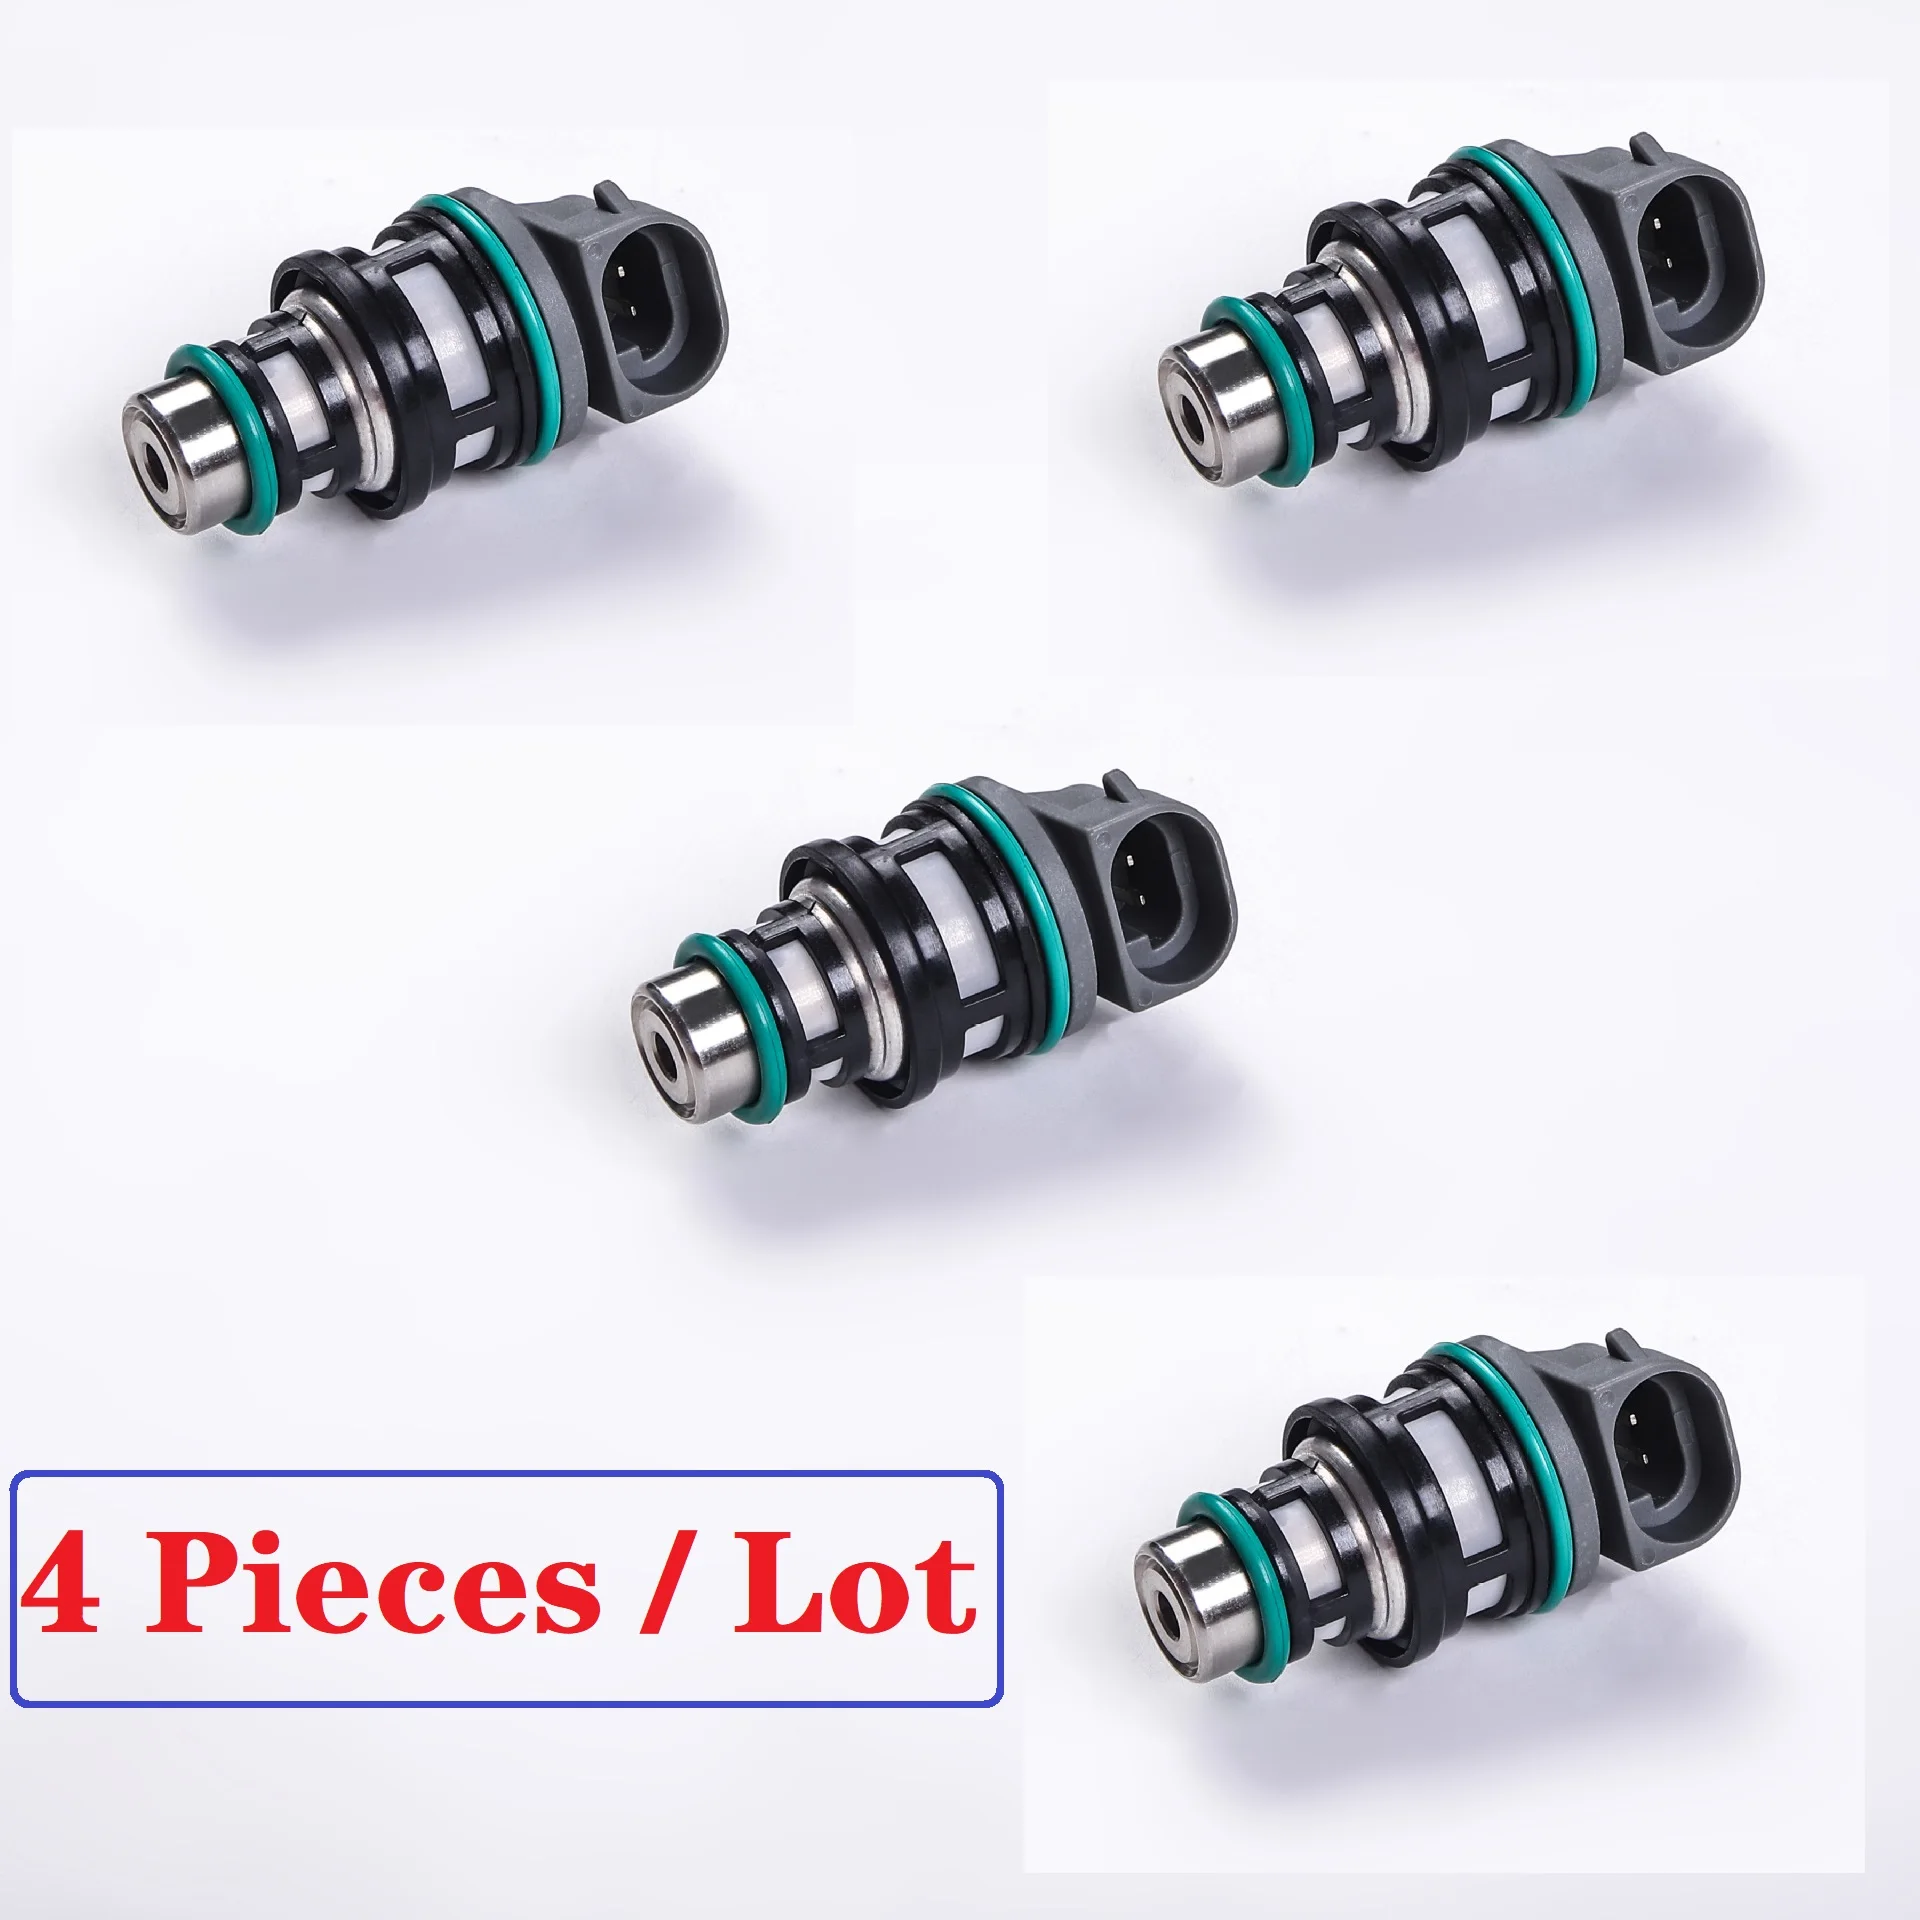 

5 Holes 4 Pieces Fuel Injector for 2.2L Chevy GMC Cavalier Buick Pontiac Oldsmobile Isuzu 17112693, 17113124,17113197,17109130